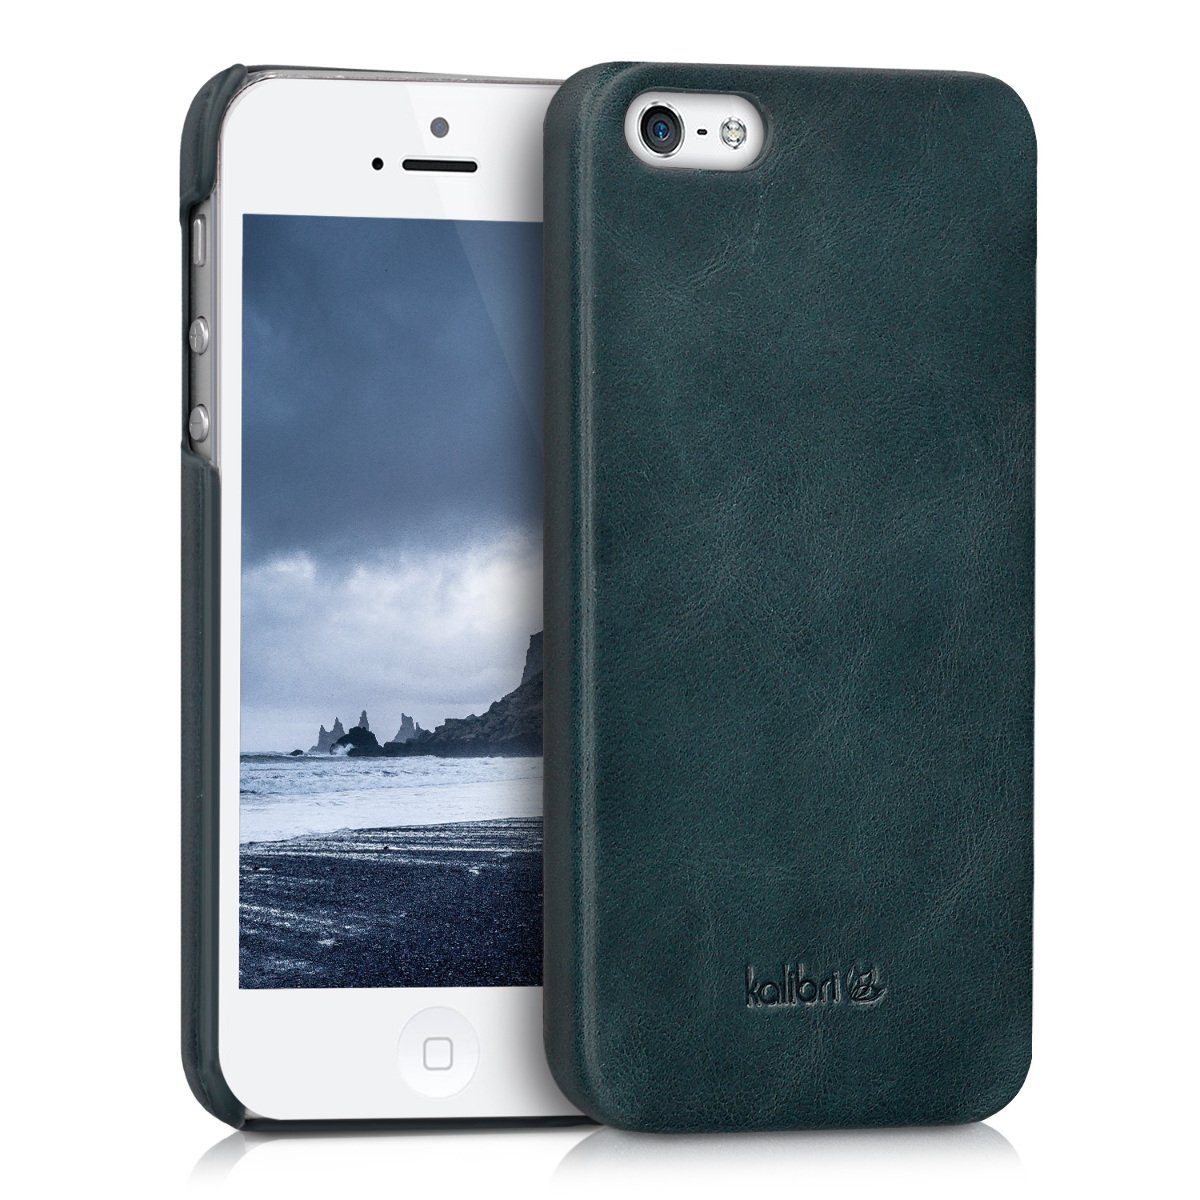 kalibri Handyhülle, Hülle für Apple iPhone SE (1.Gen 2016) / 5 / 5S - Leder  Handy Cover Case - Hardcover Schutzhülle